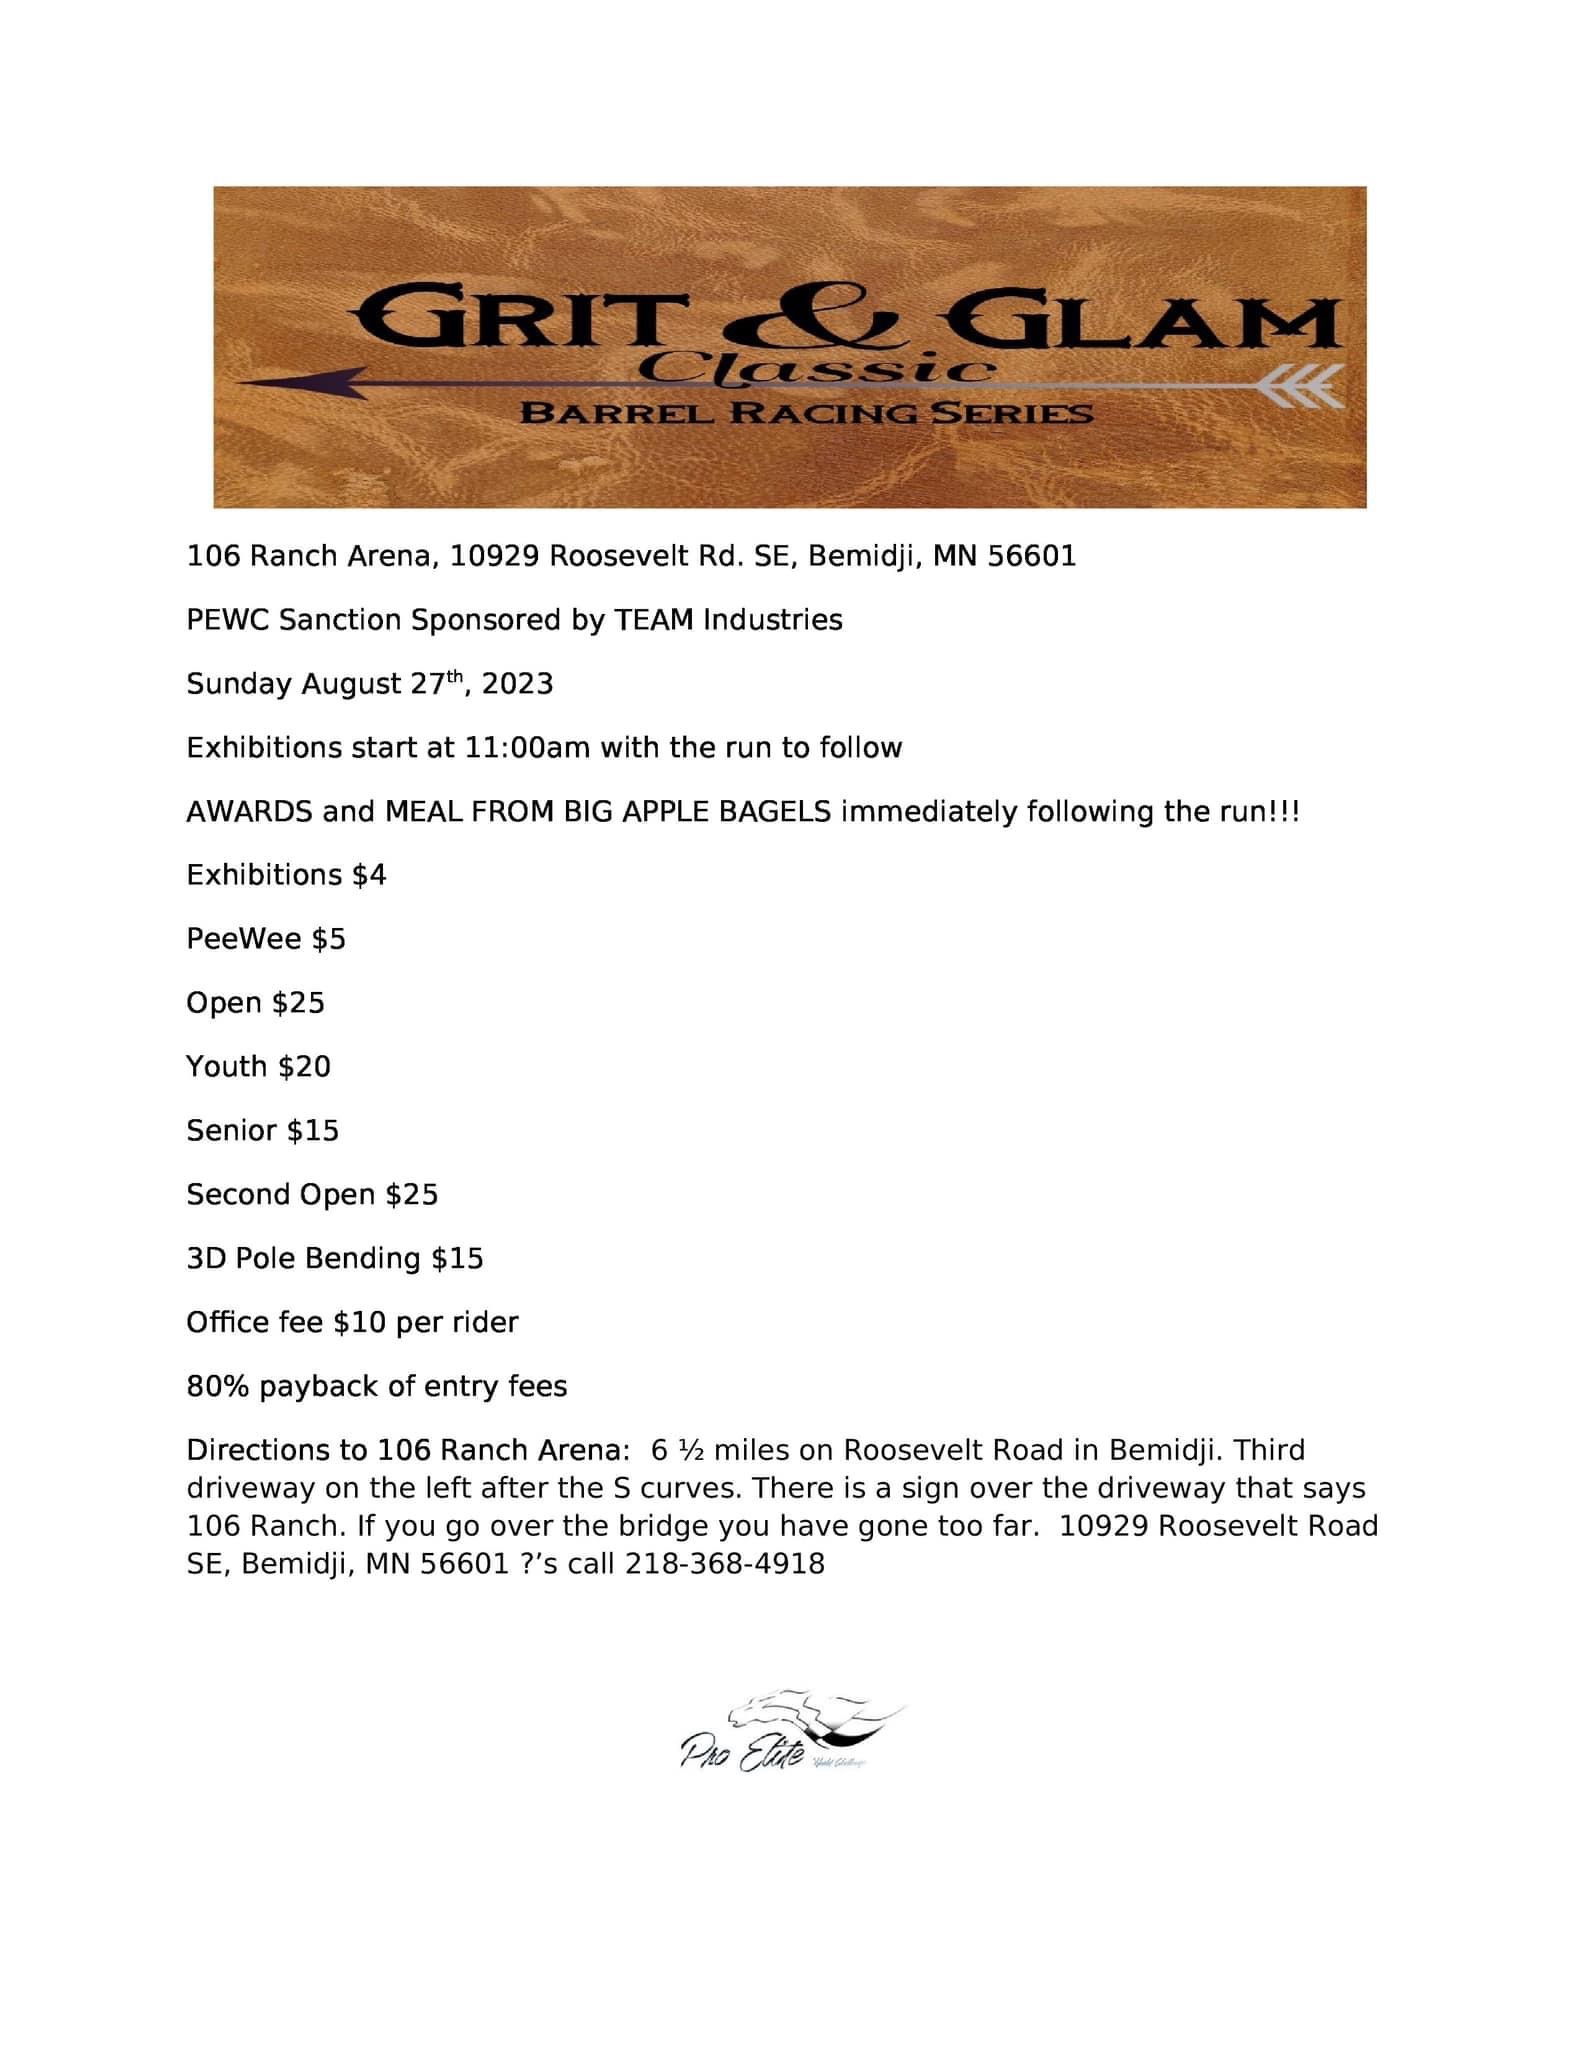 Grit & Glam Classic Barrel Racing Series